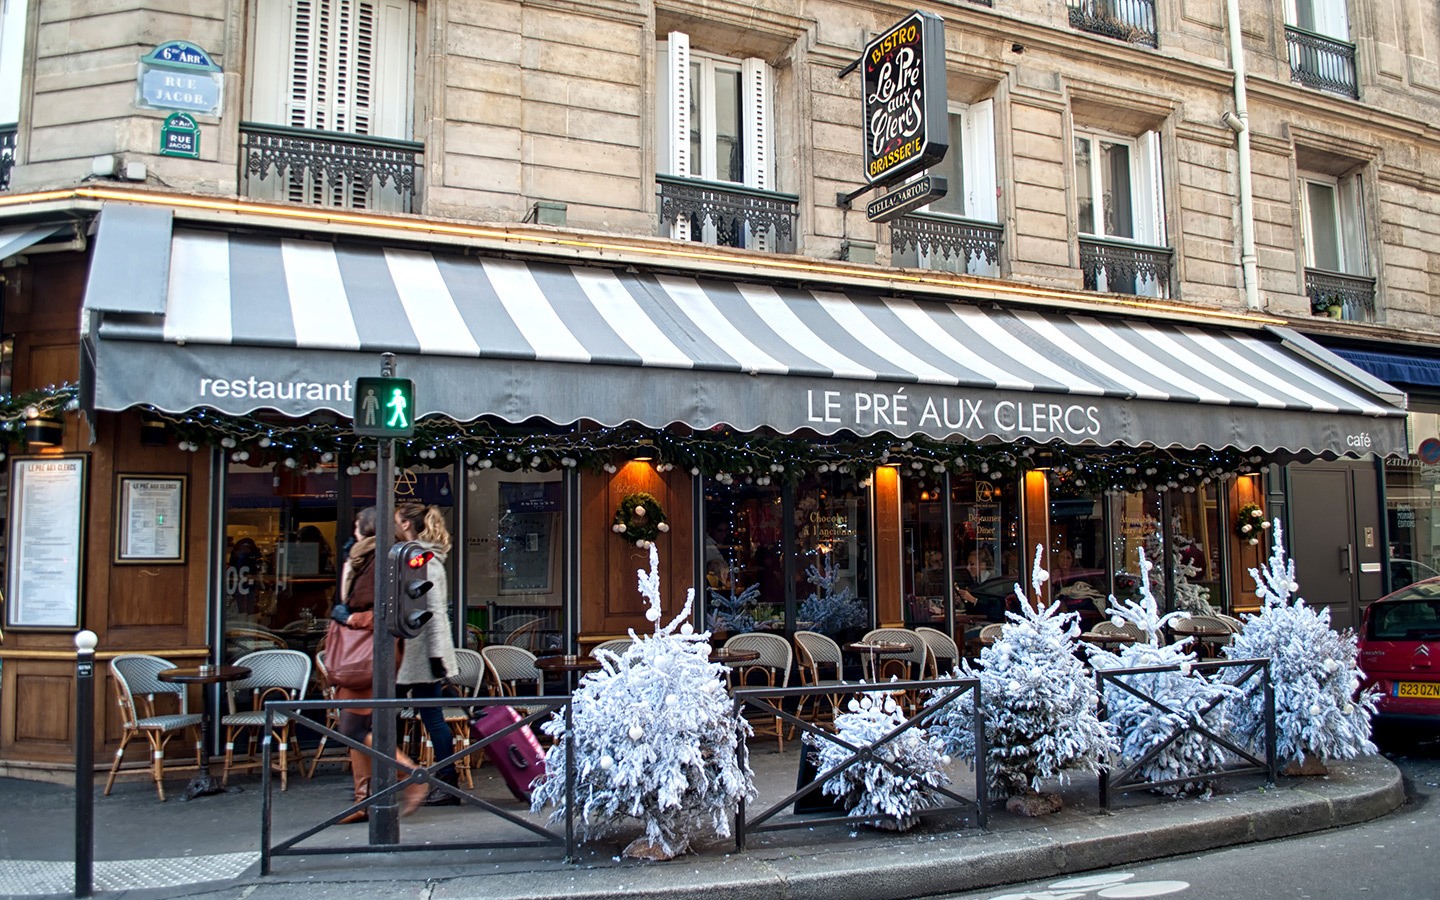 Cafe in St-Germain in Paris at Christmas